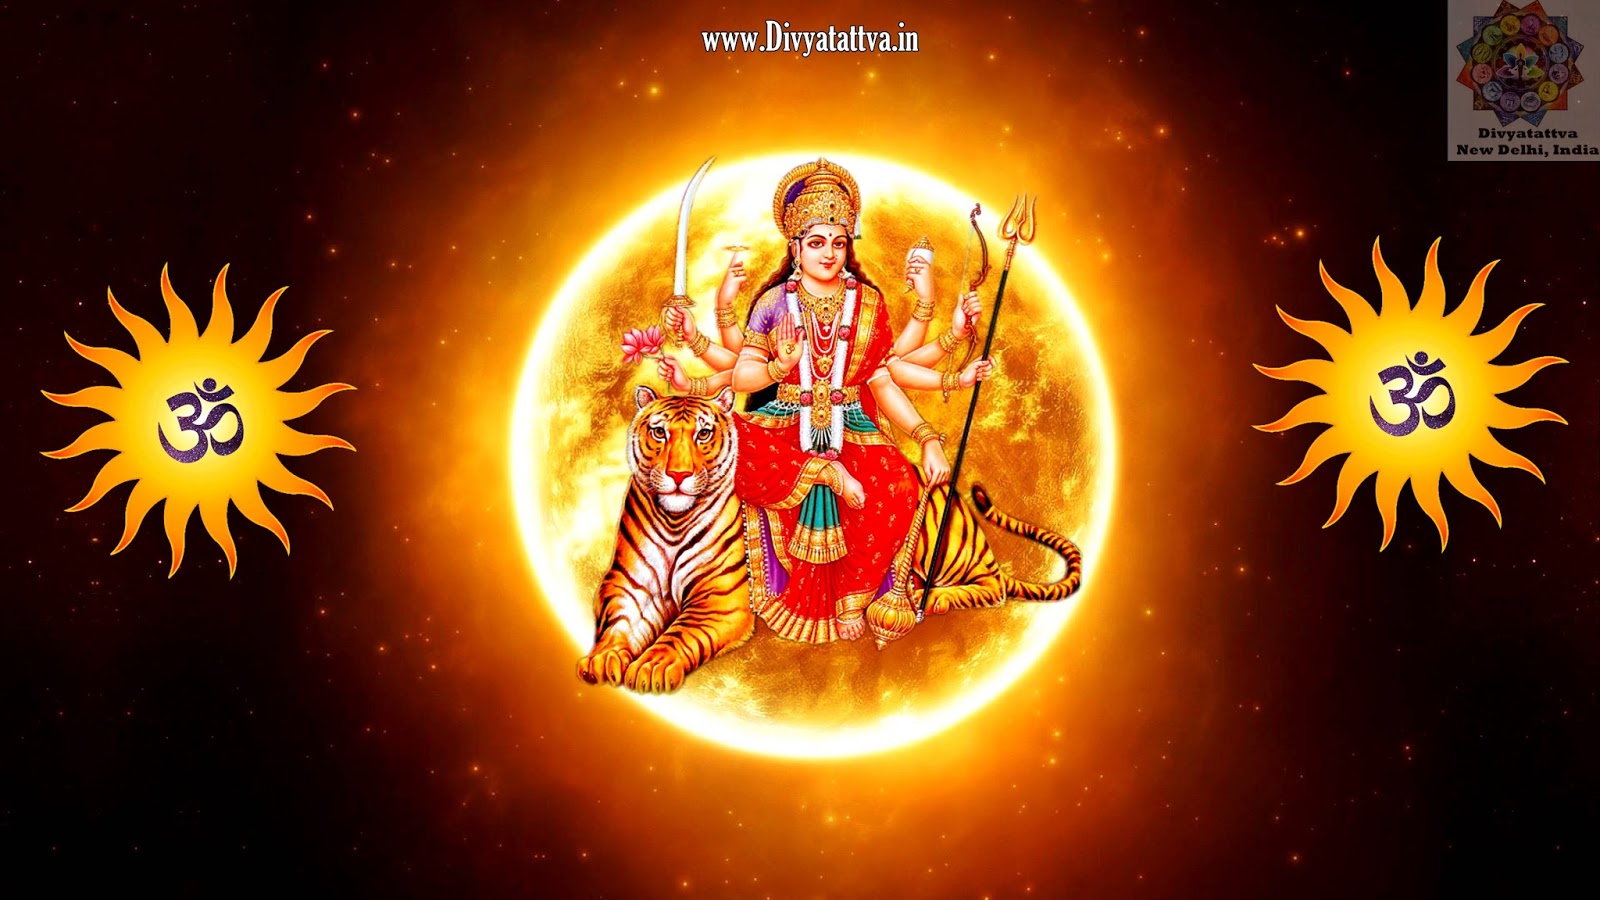 Maa Durga Wallpaper Hd, Best Images Of Maa Durga, Durga - Background Maa Durga Hd Gif - HD Wallpaper 